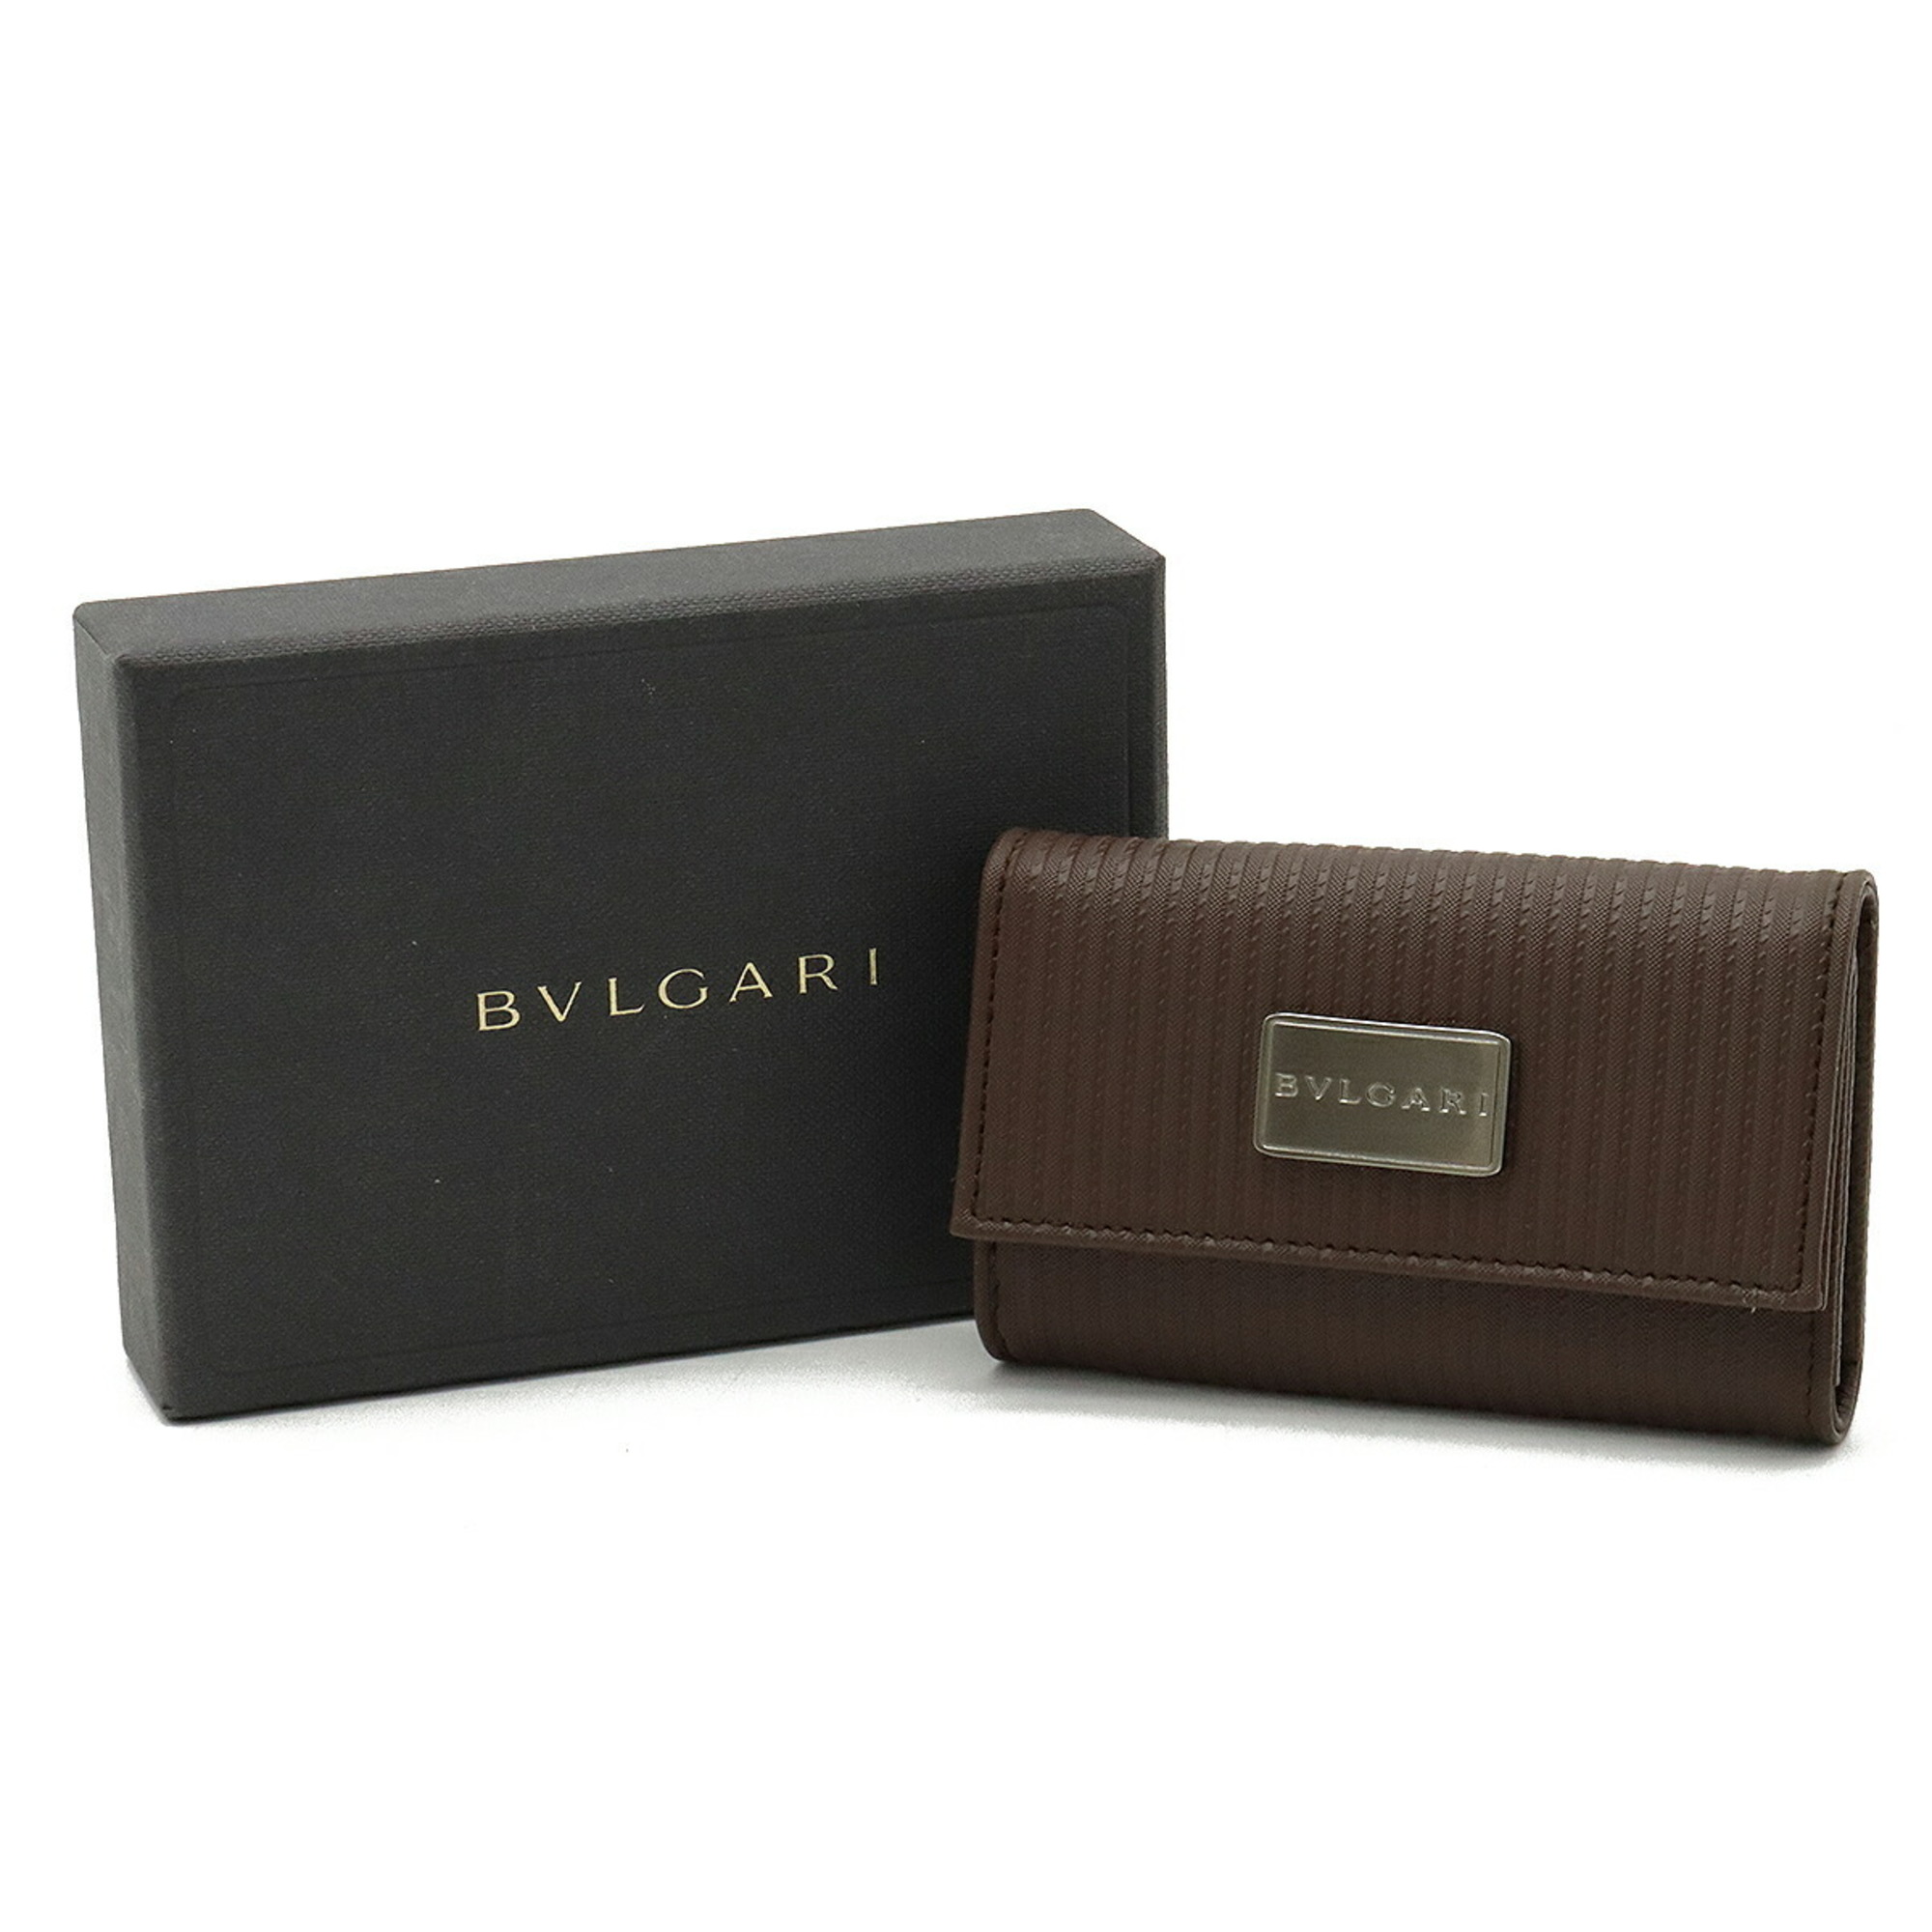 BVLGARI Bvlgari Millerige 6 Key Case Coated Heritage Canvas Leather Brown 25559